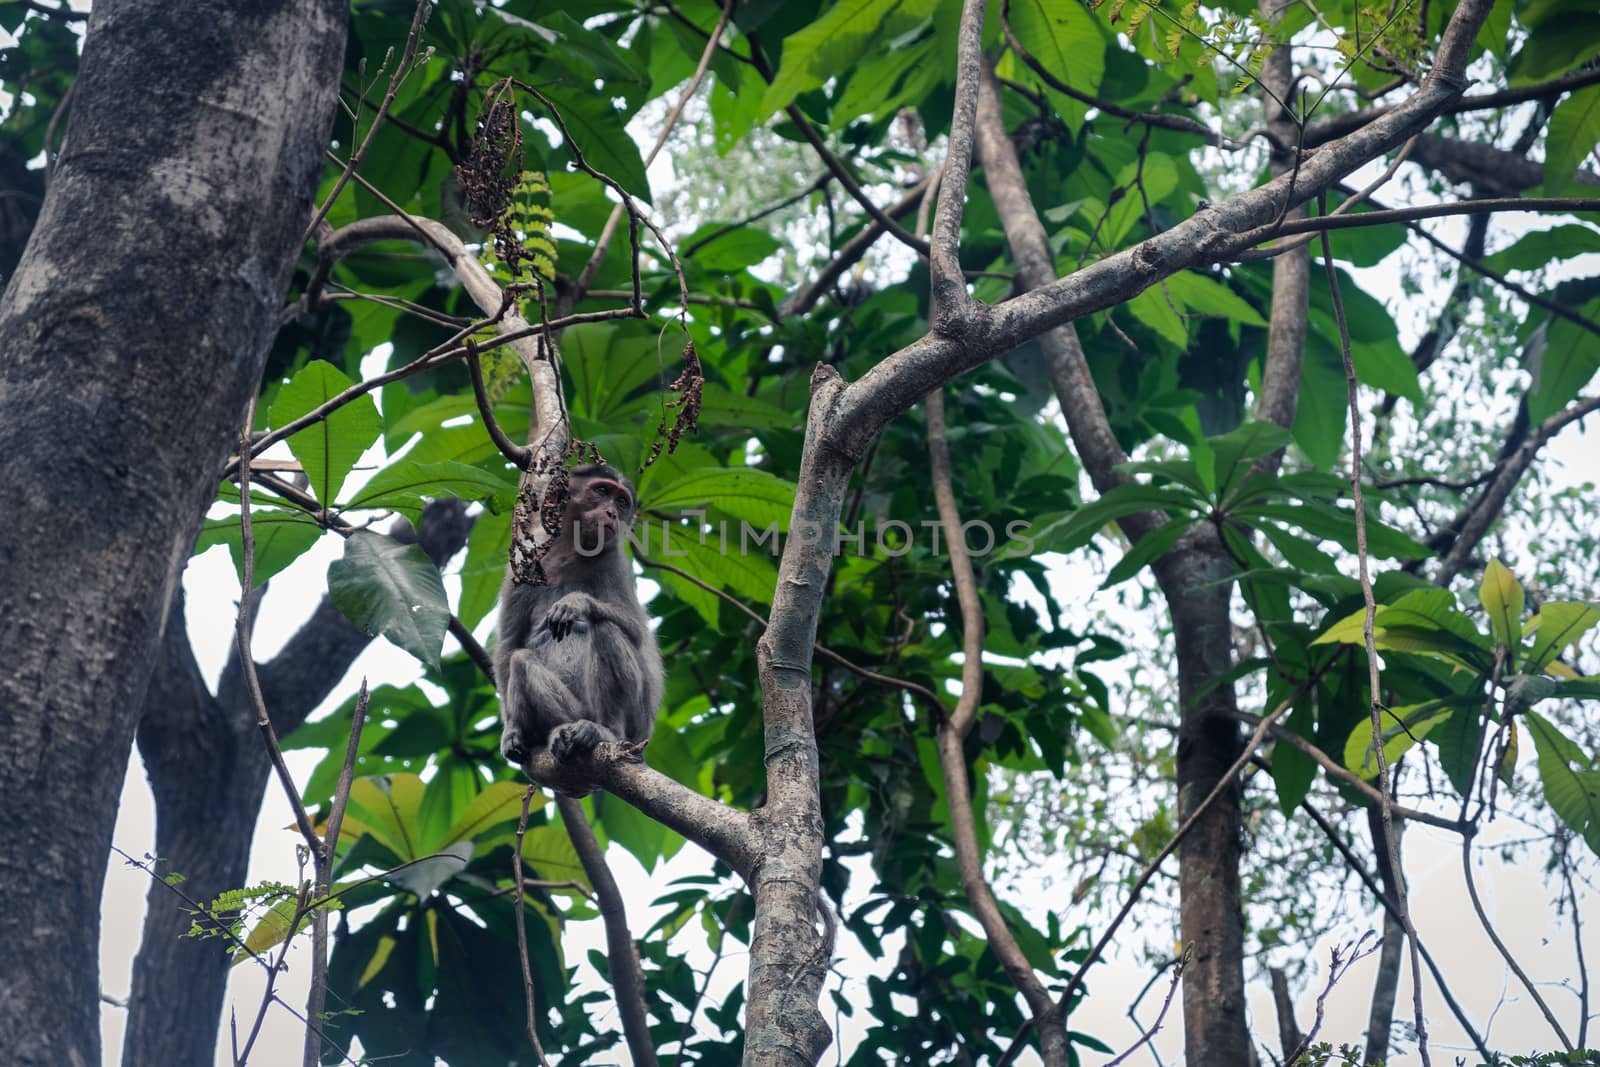 Monkey On Branch by snep_photo